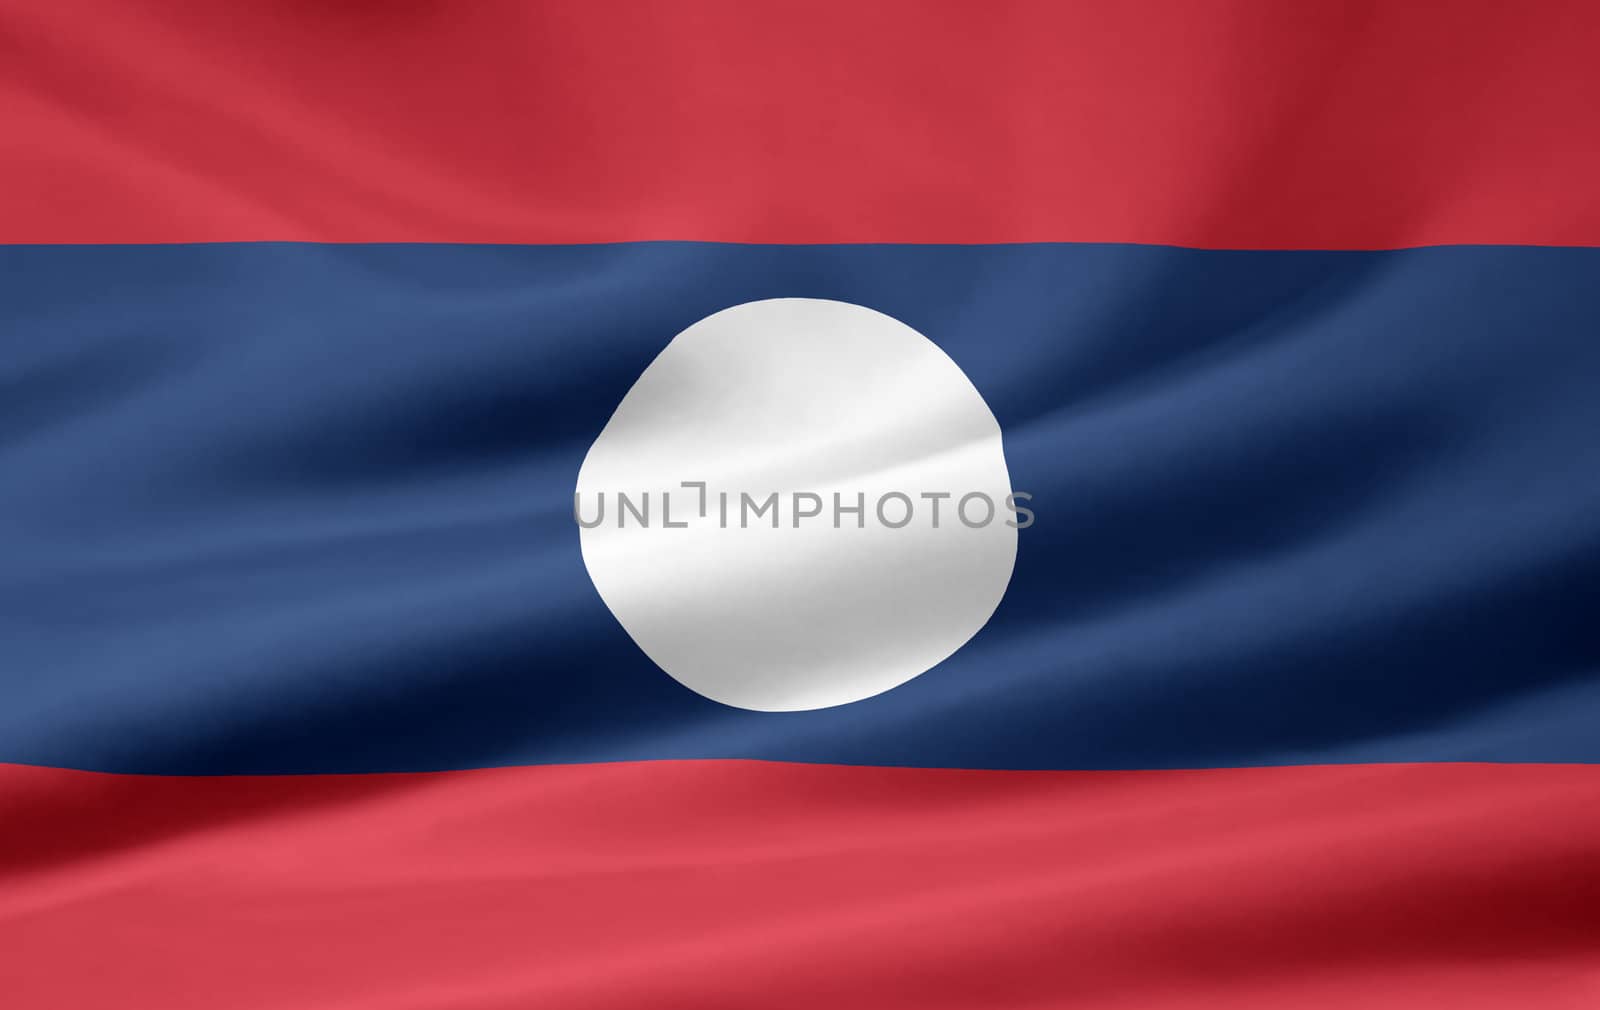 High resolution flag of Laos